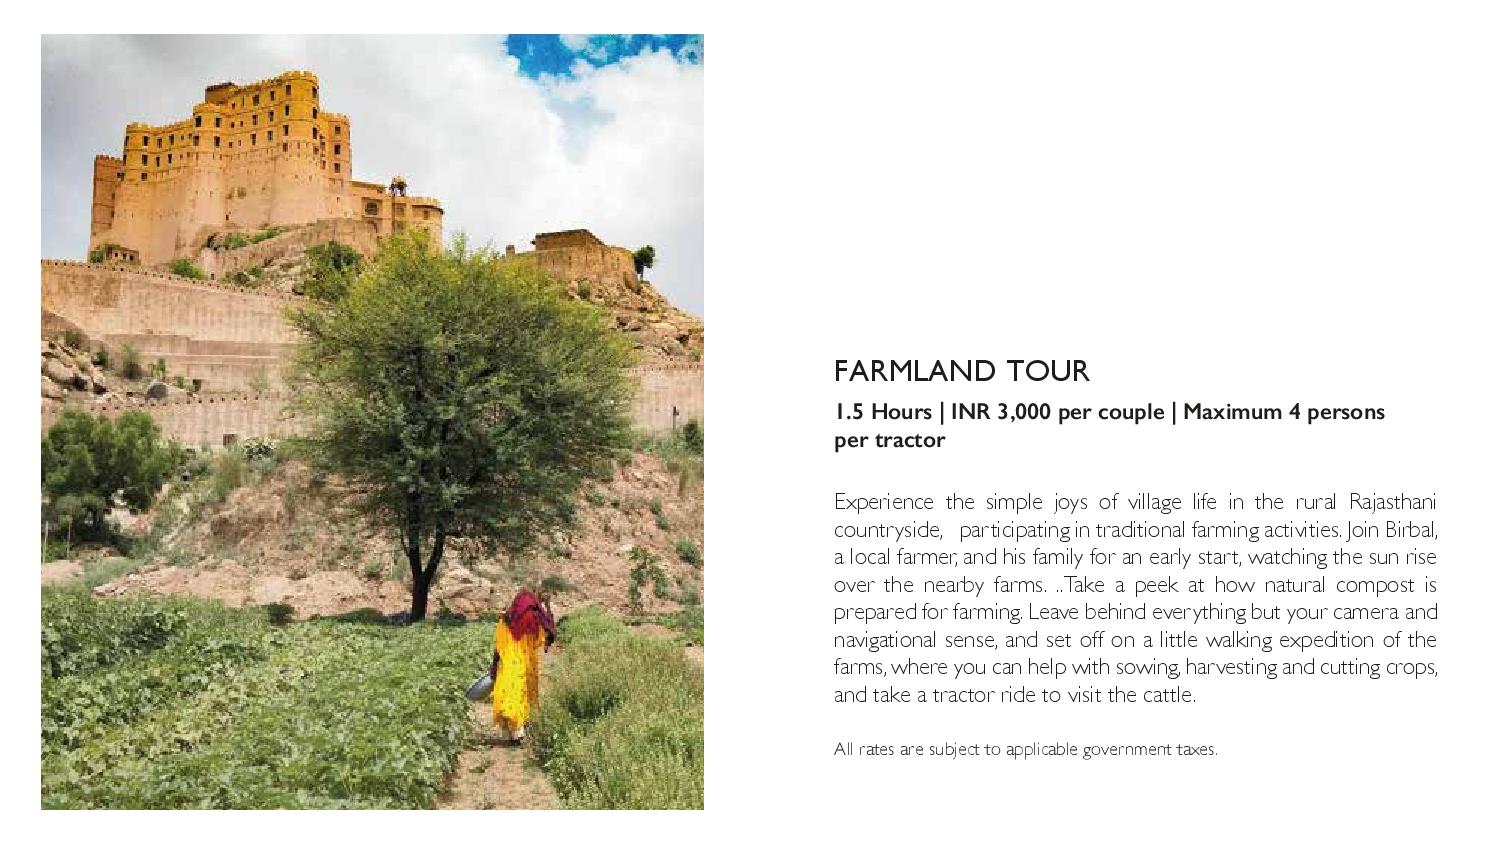 alilafortbishangarh experience page 011 - REVIEW - Alila Fort Bishangarh (Jaipur, India)